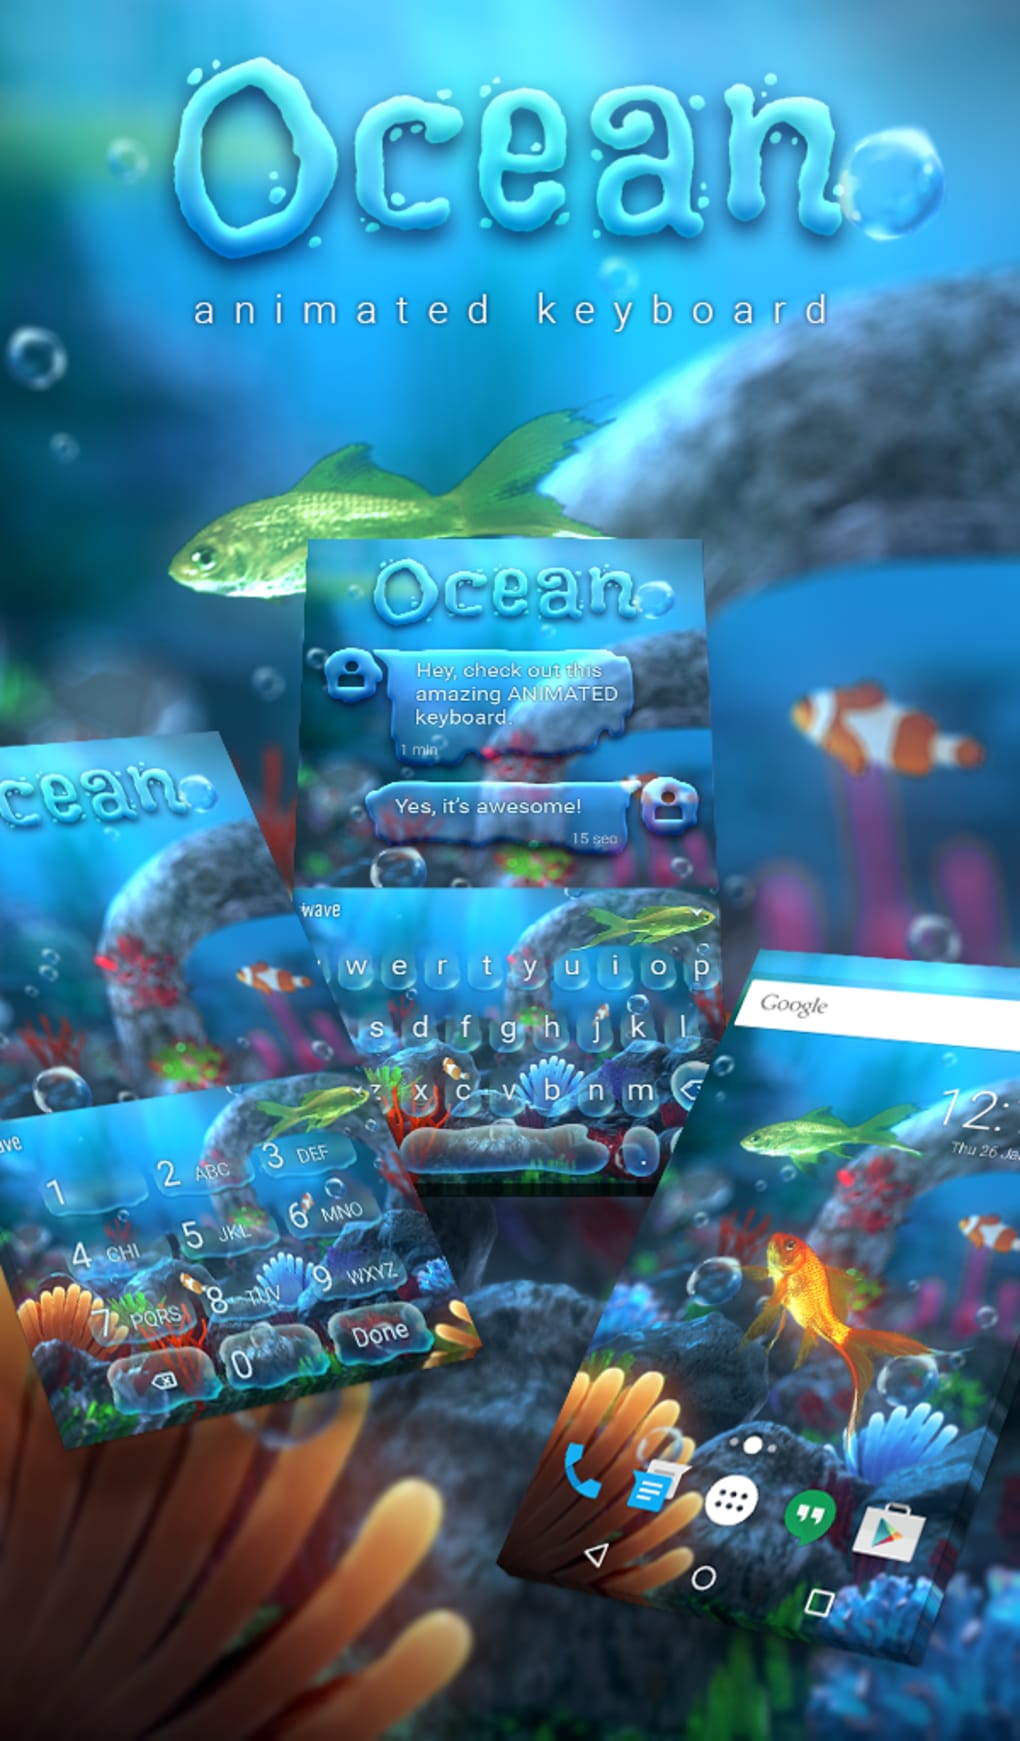 Download do APK de Wolfoo Underwater Ocean World para Android